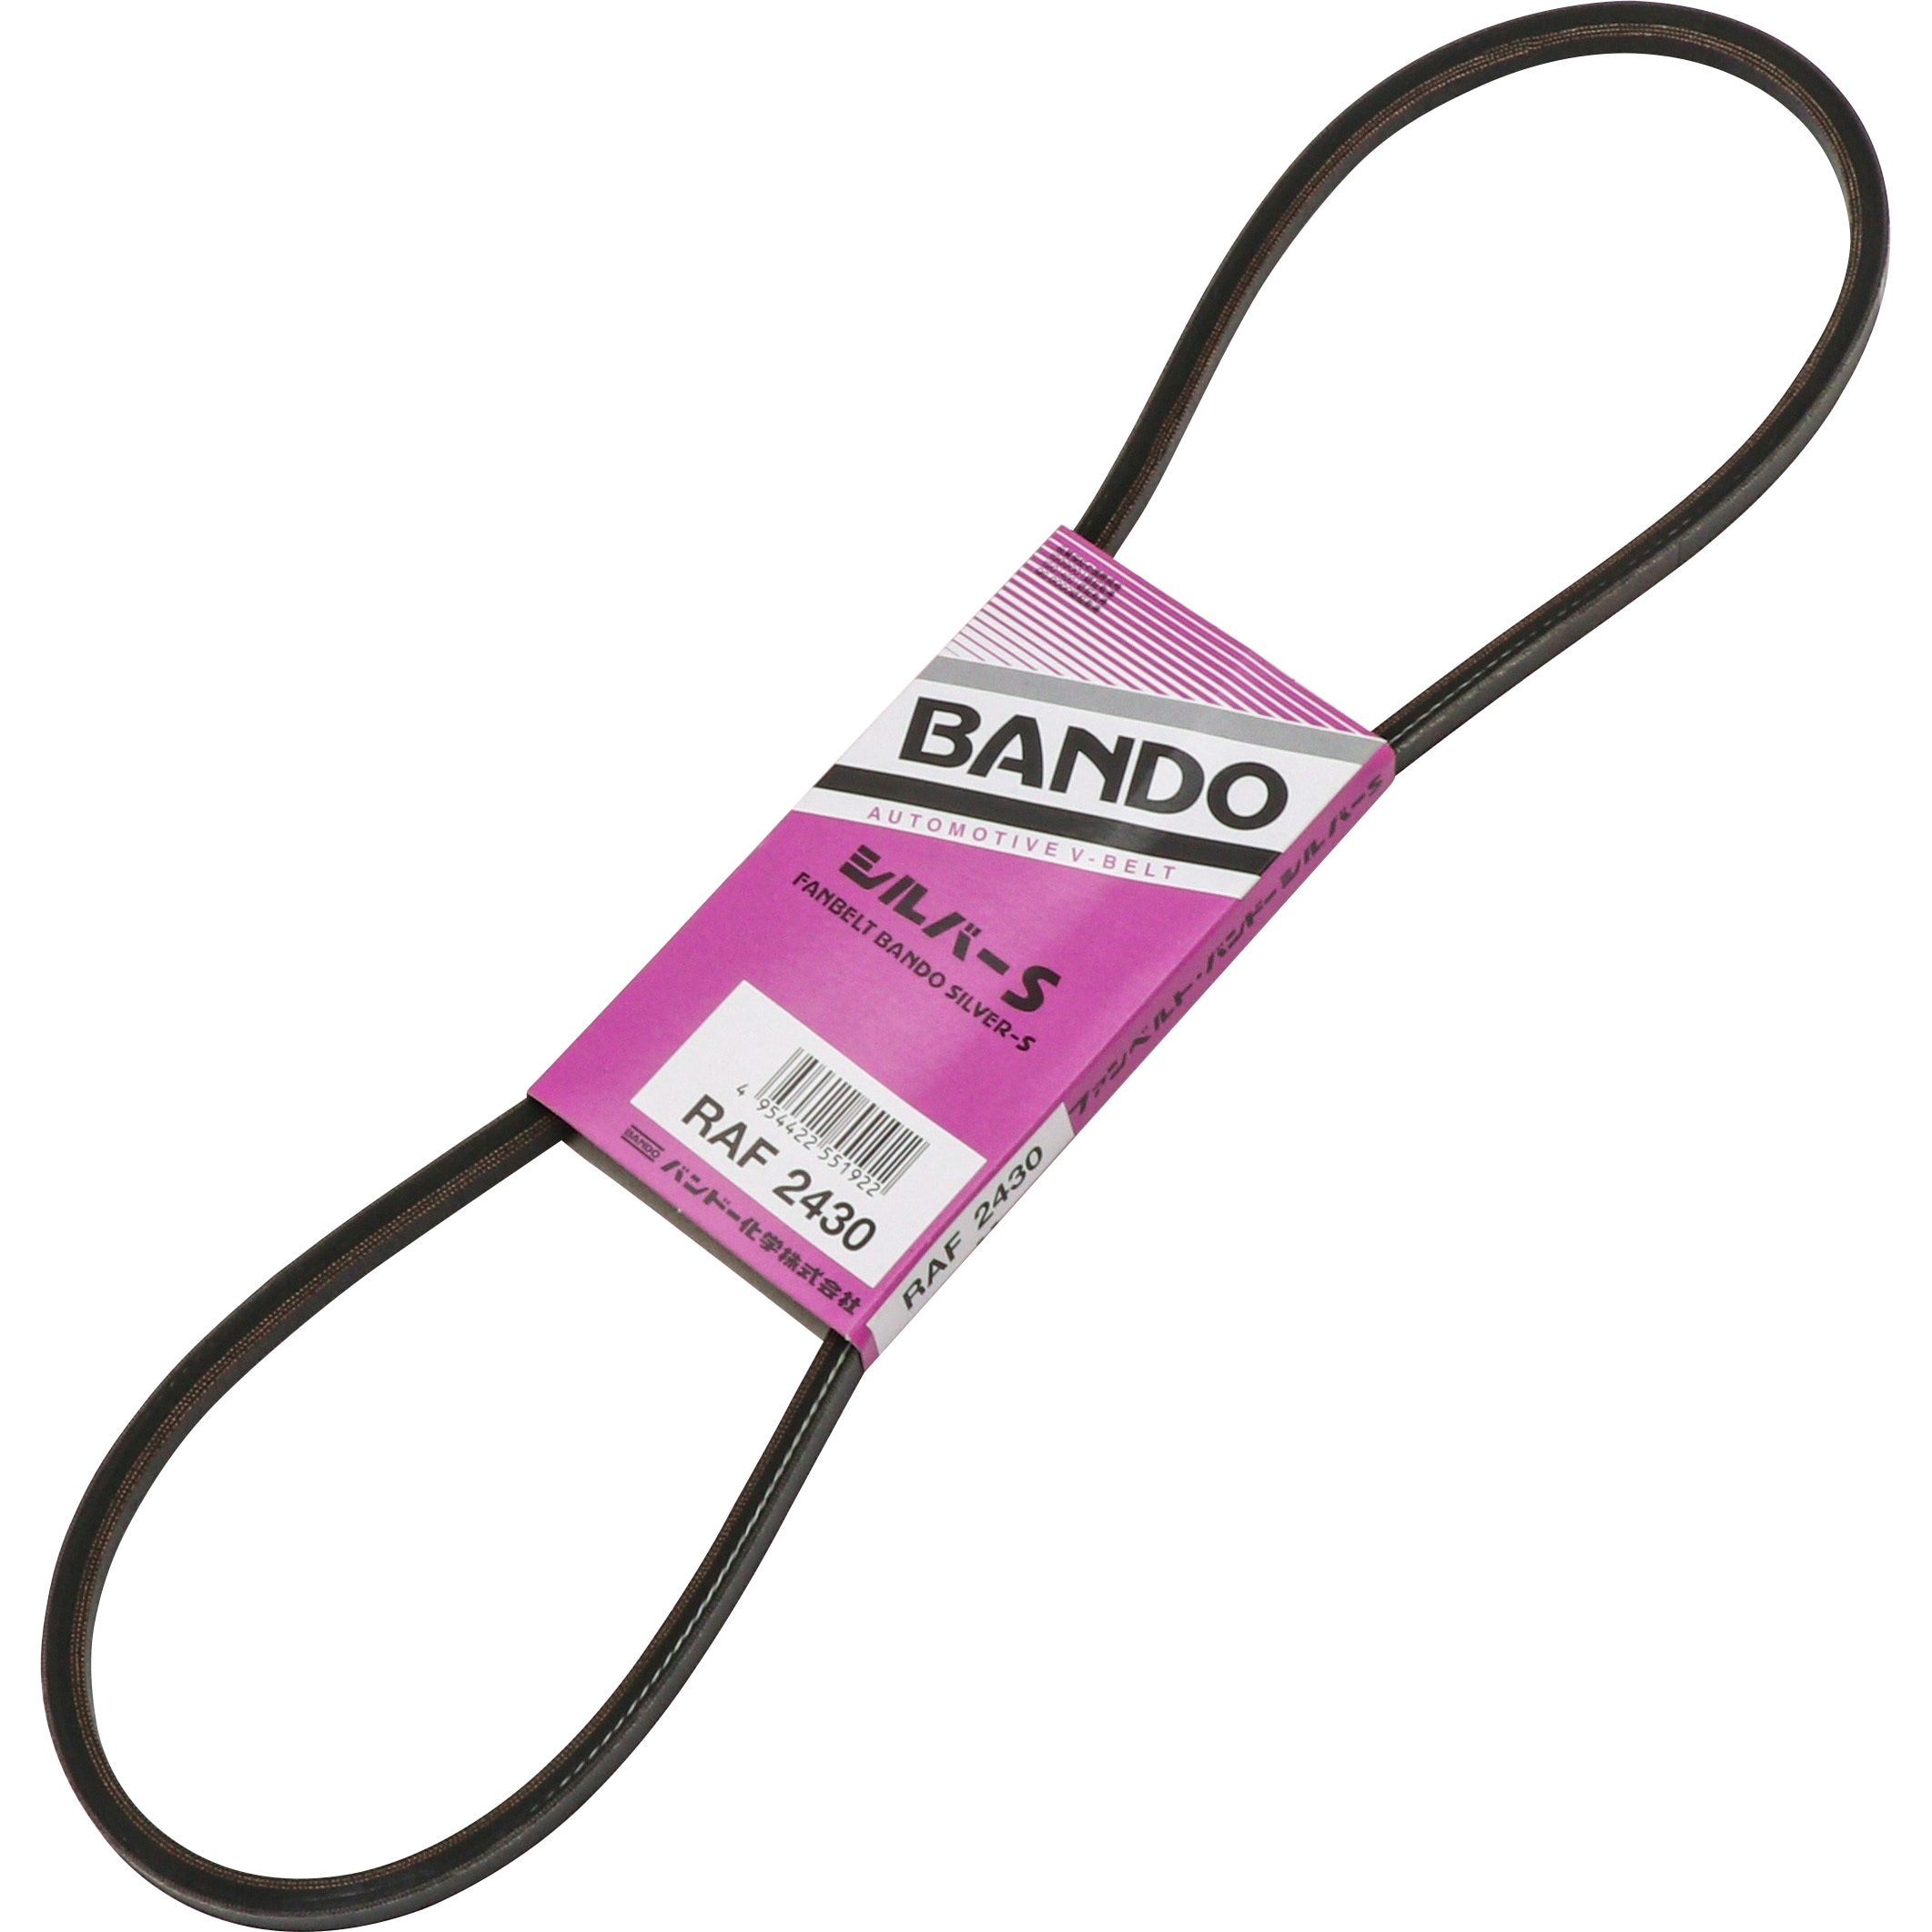 BANDO バンドー化学 ファン用 ベルト RAF2350 ホンダ アクティ VH バンドー製 ベルト 交換用 メンテナンス  38763-679-003 パーツ